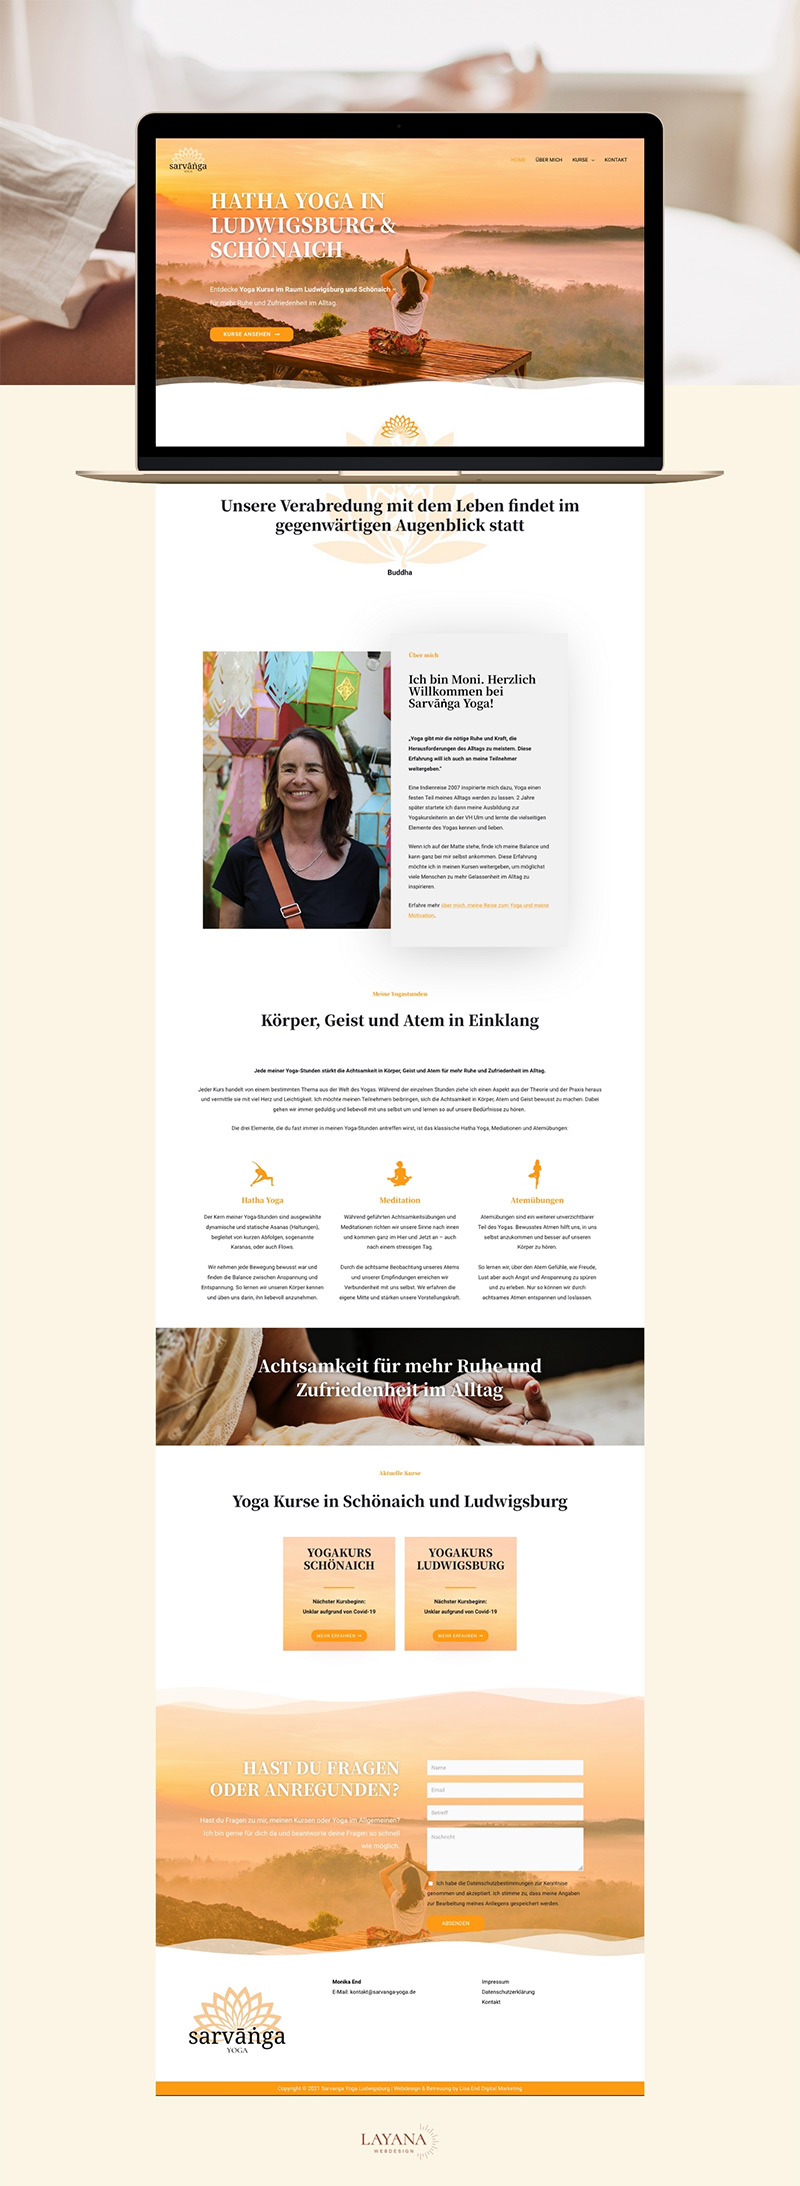 Website für Hatha Yoga Studio Sarvanga Yoga, Screenshot auf Desktop